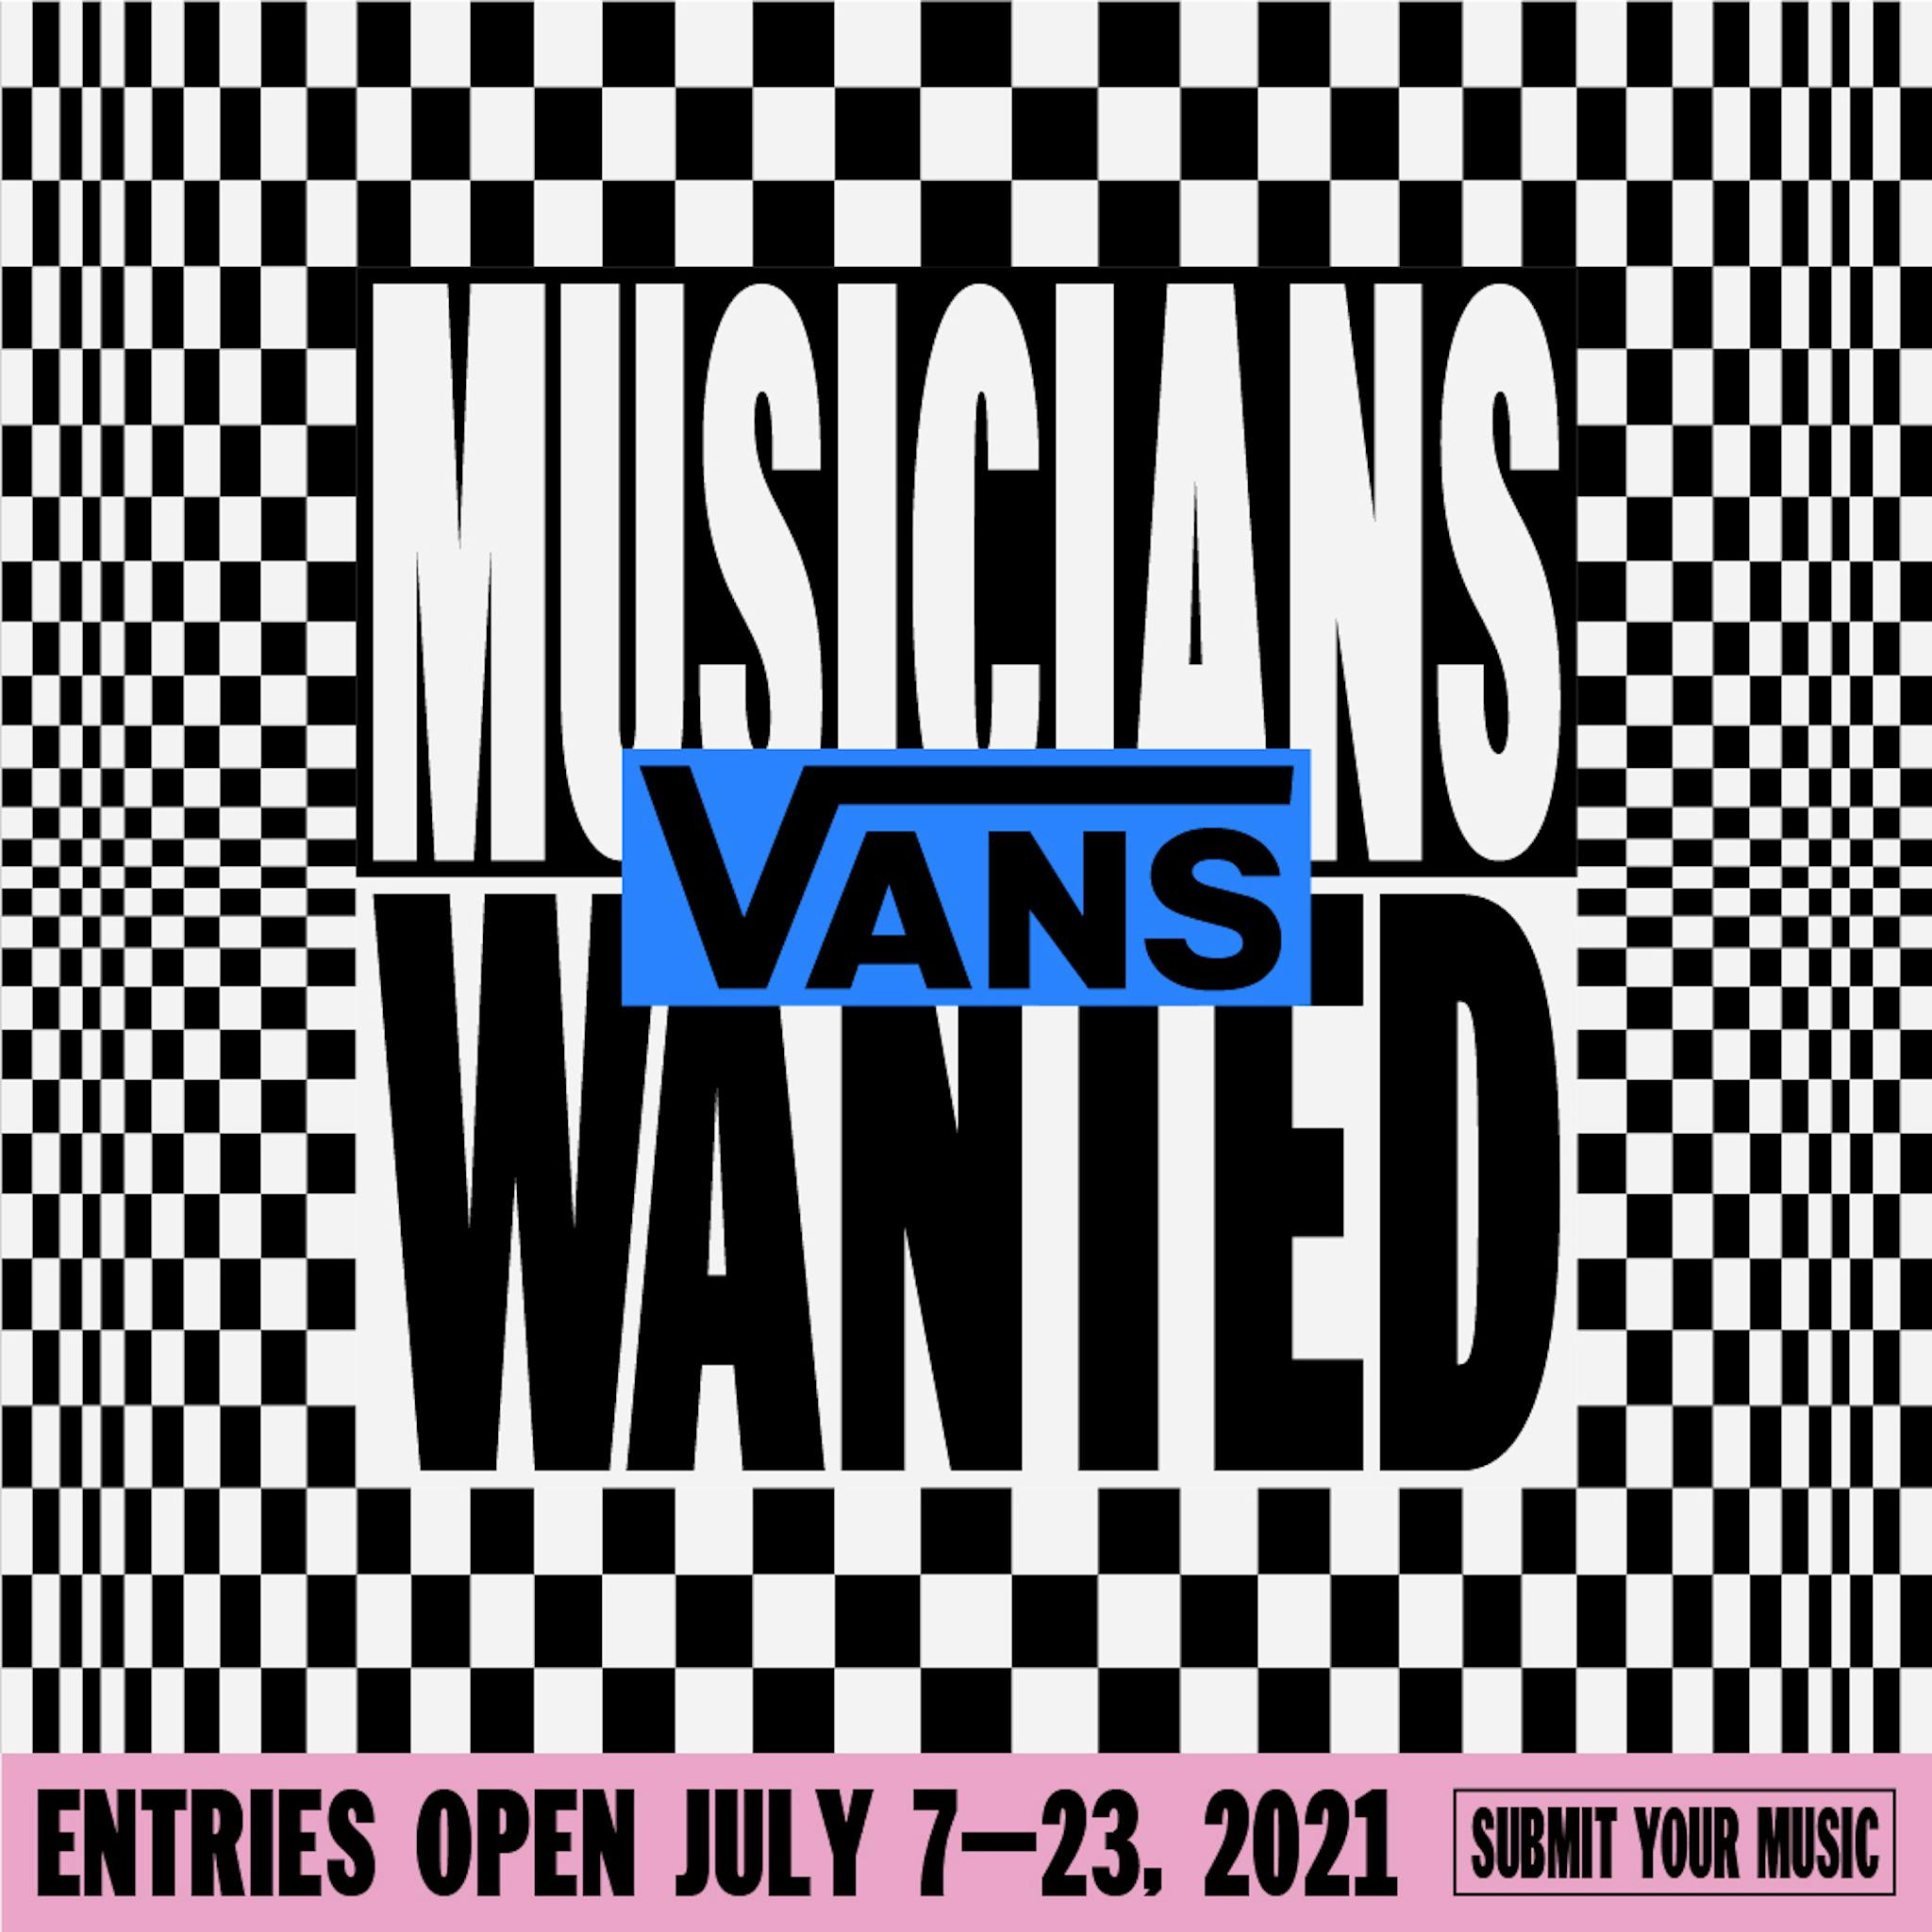 Vans Musicians Wanted poster